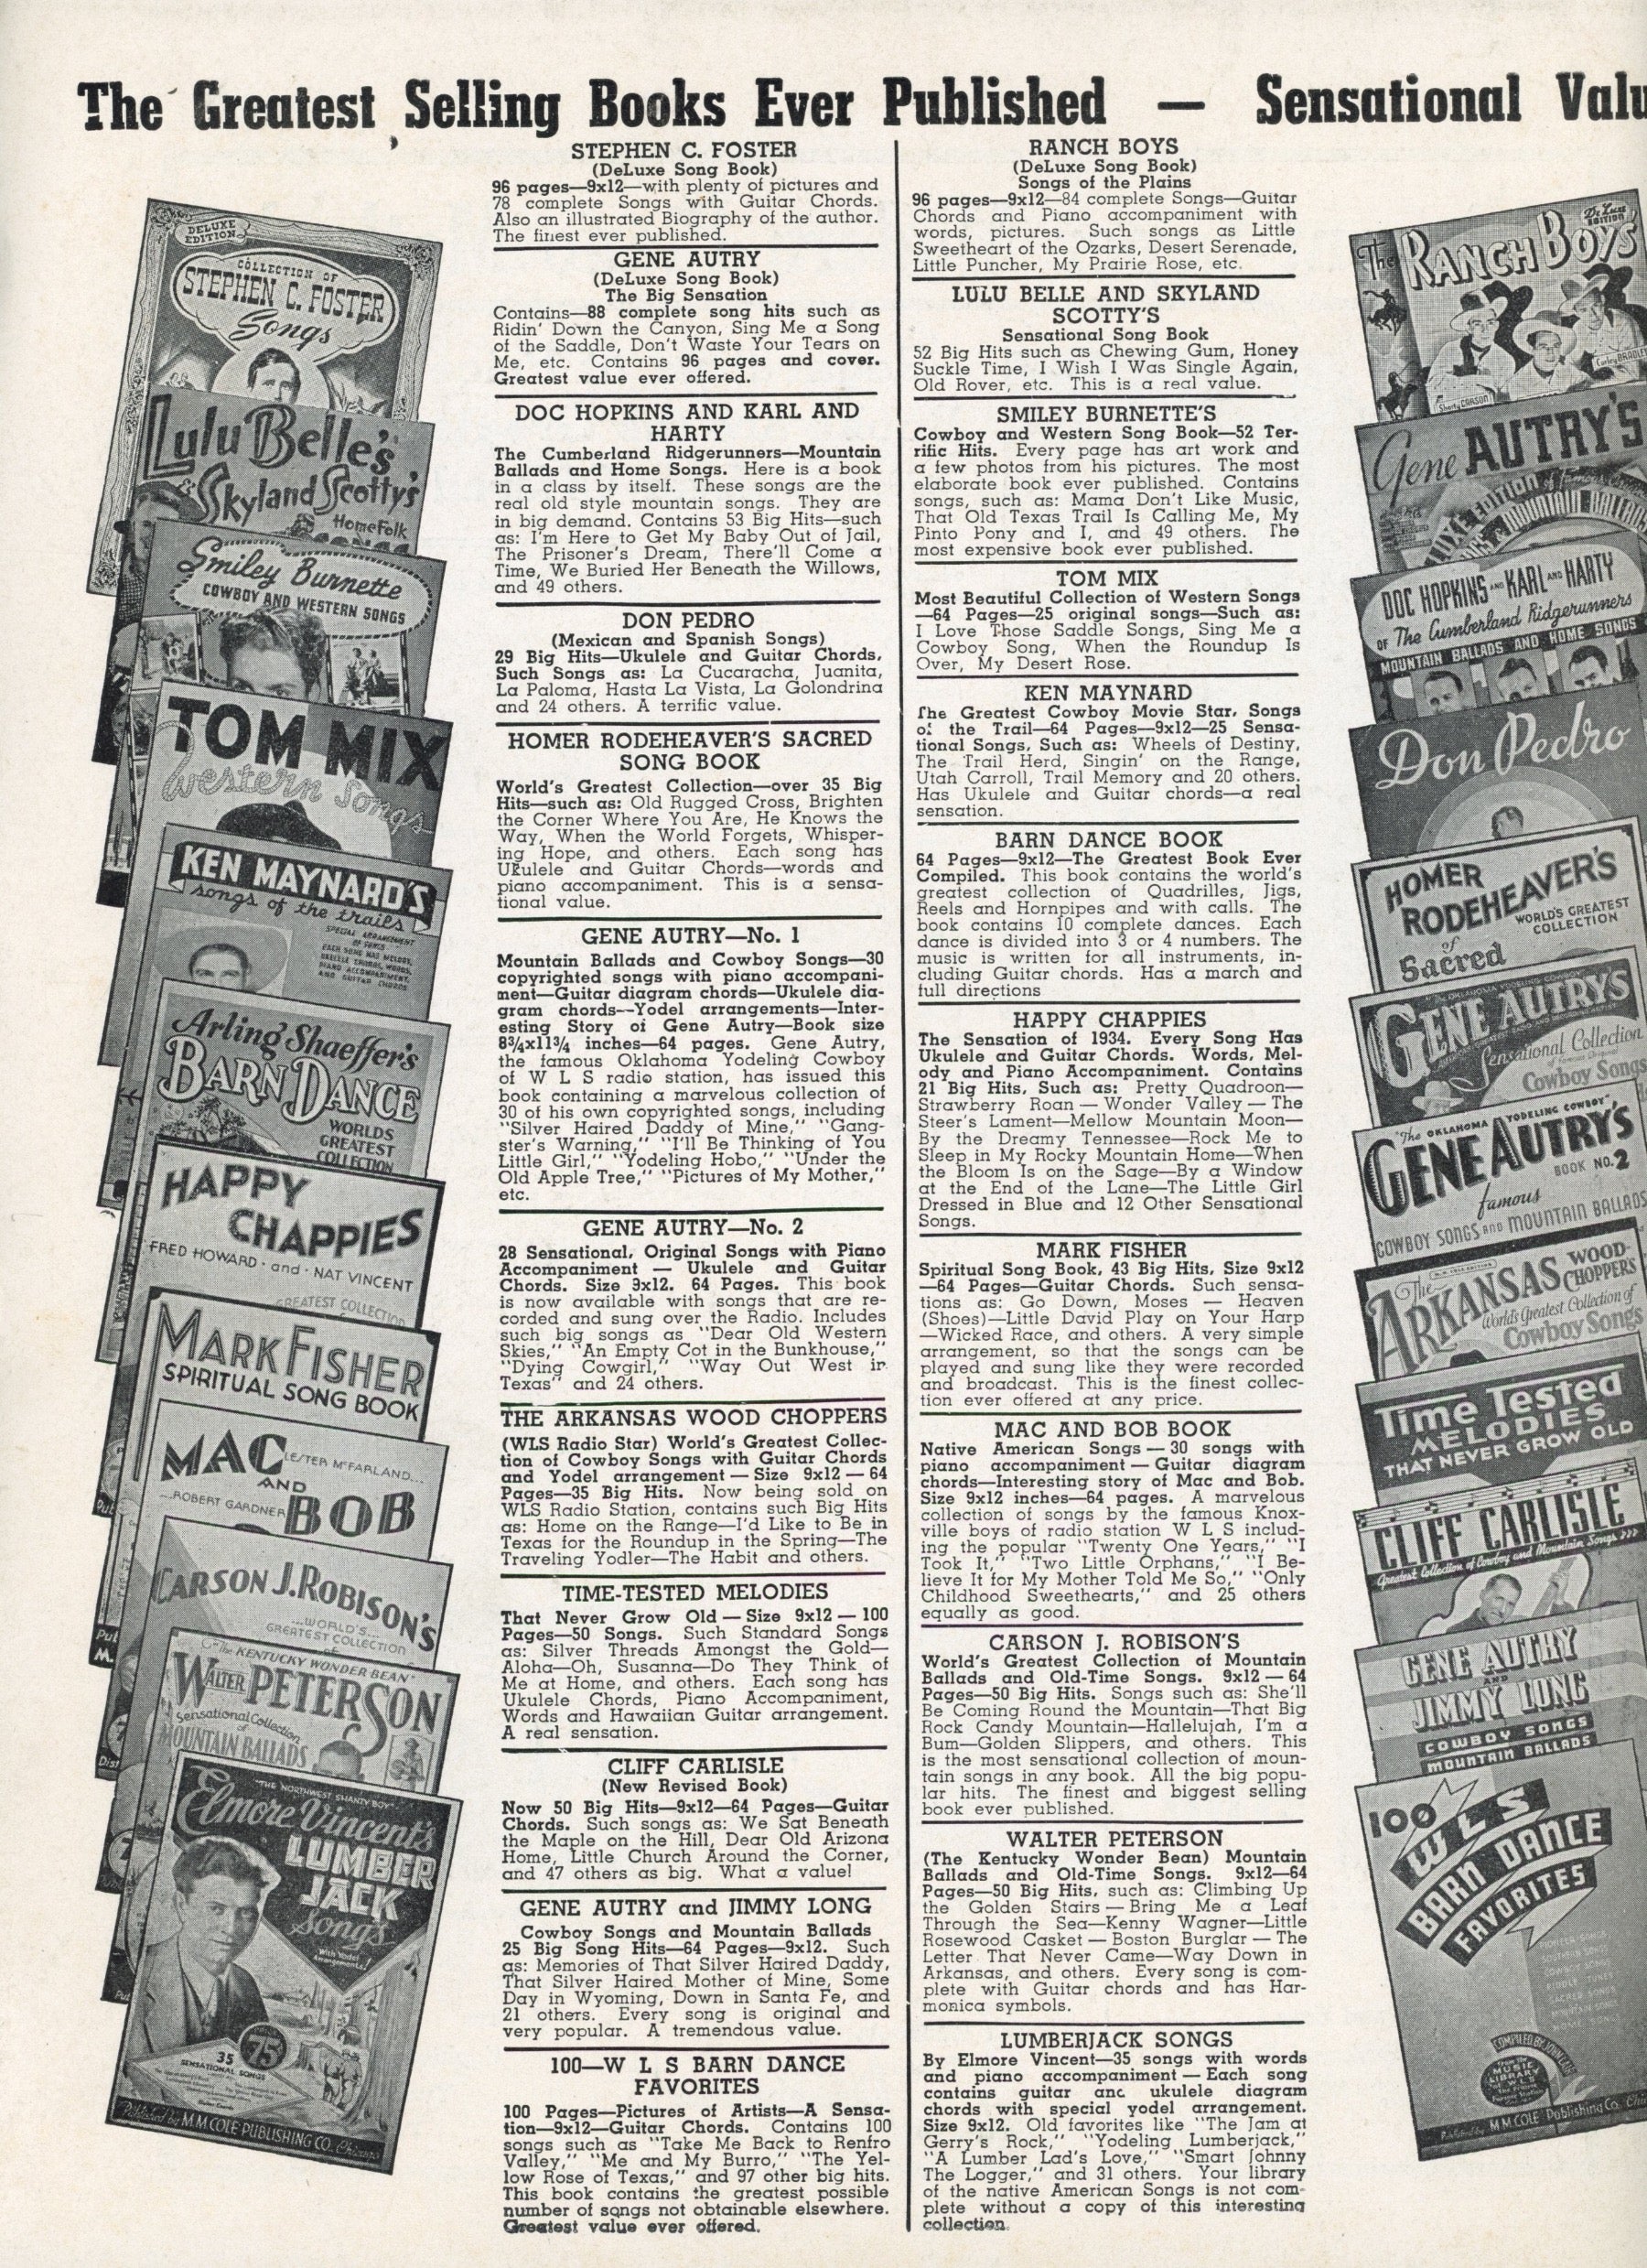 CALVARY by Paul Rodney Vintage Sheet Music ©1935